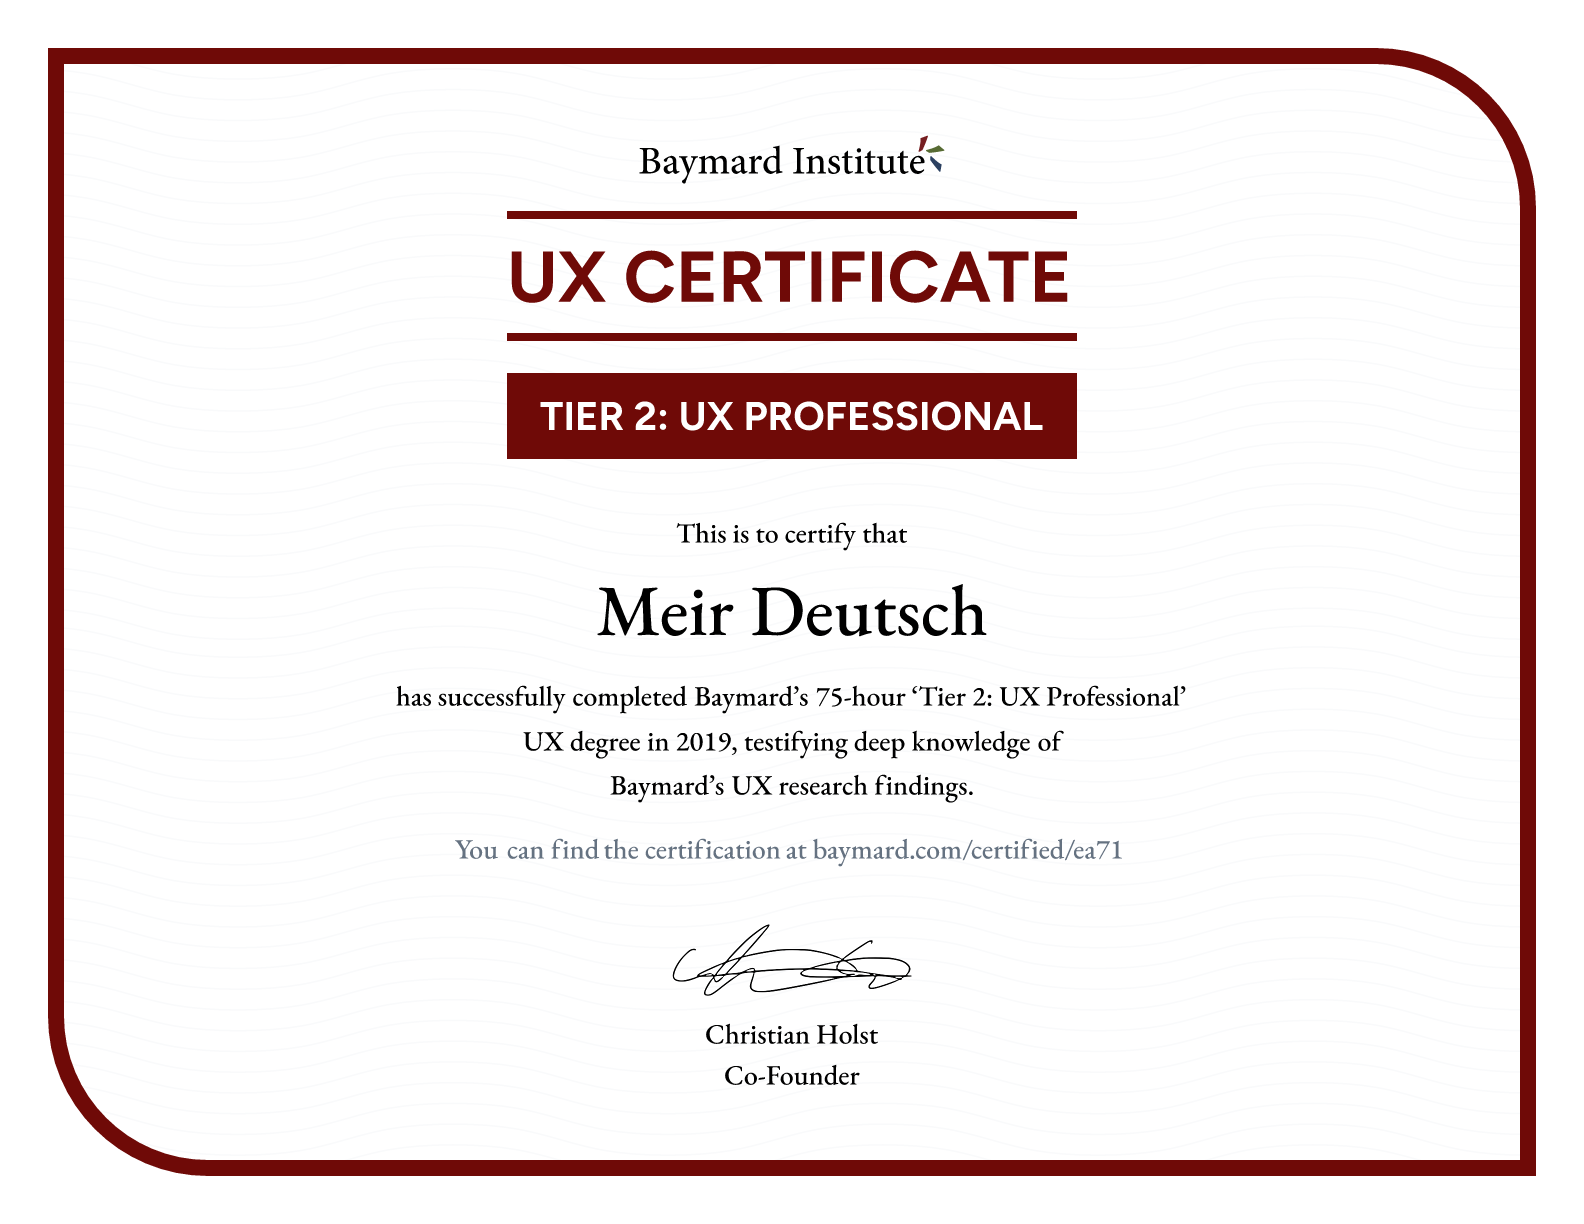 Meir Deutsch’s certificate